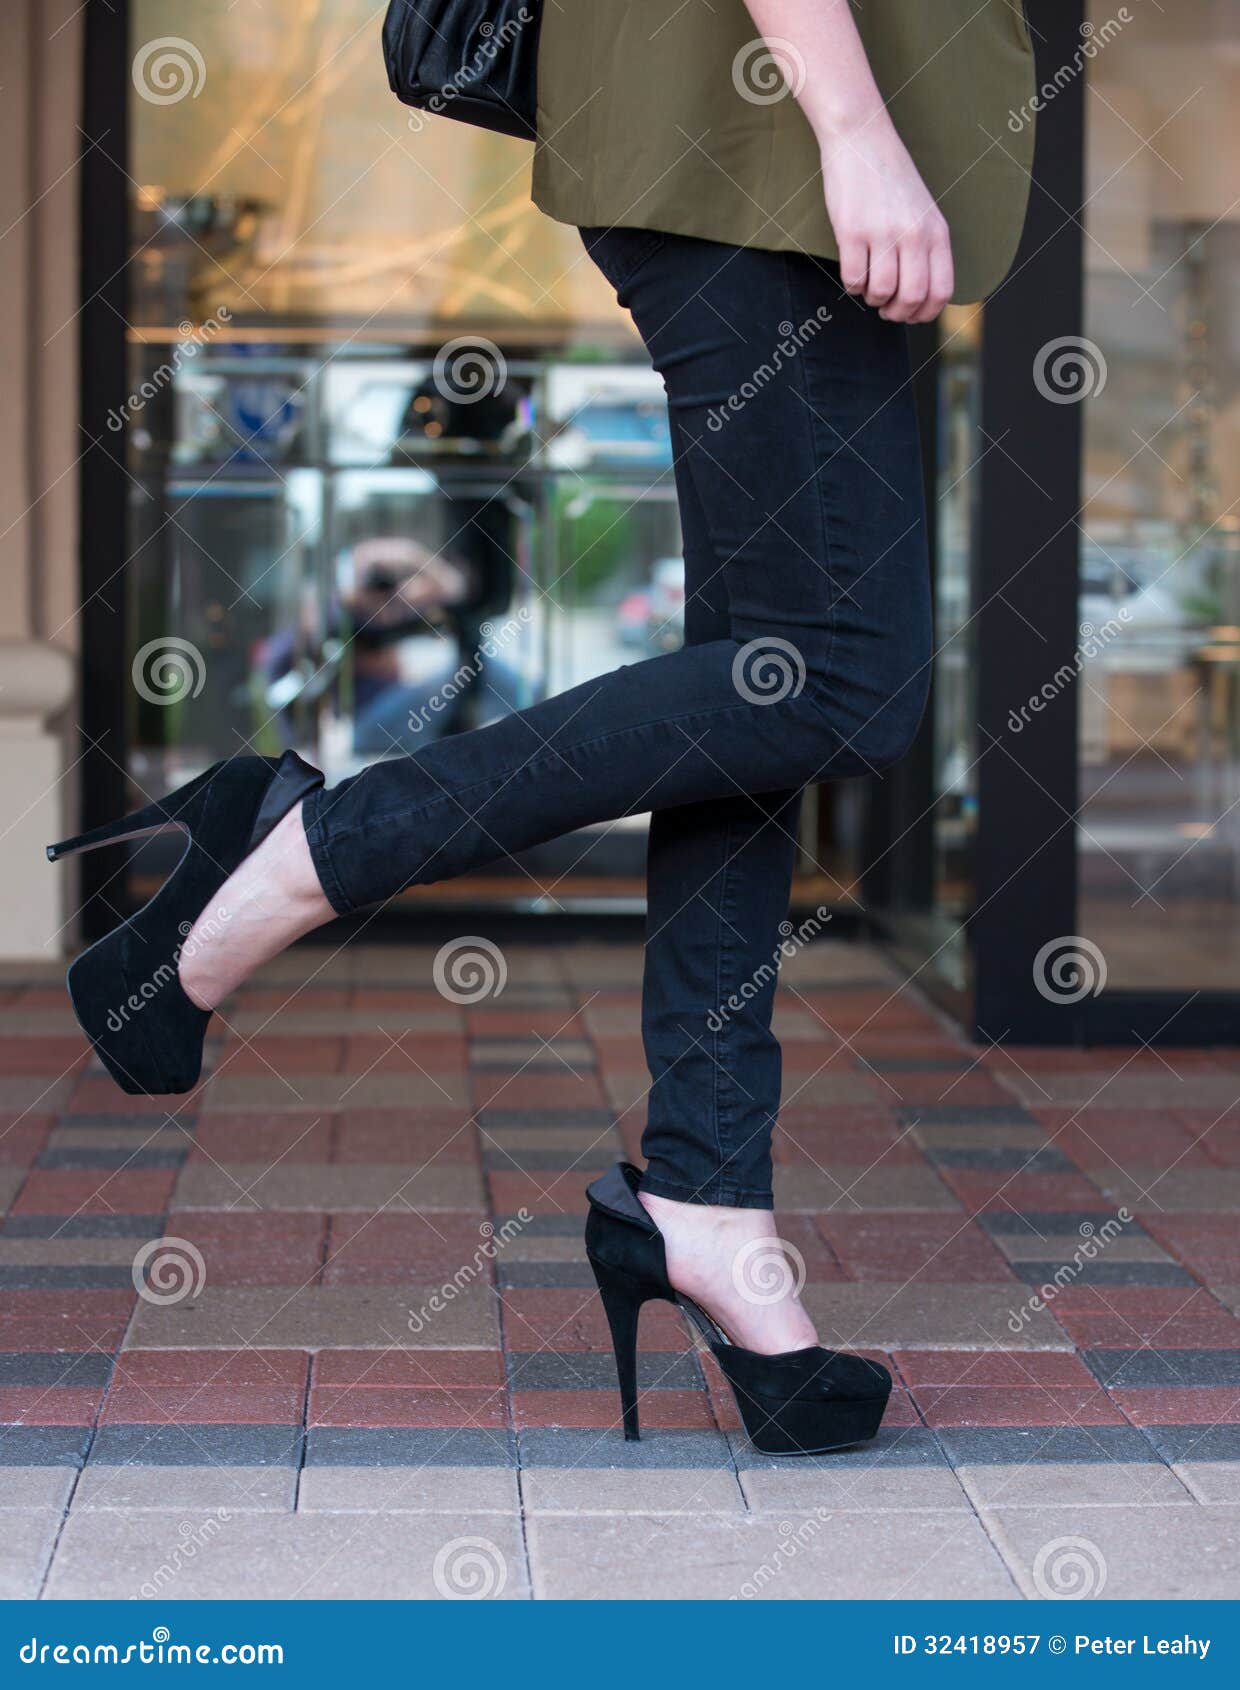 High heels on paver blocks stock image. Image of woman - 32418957